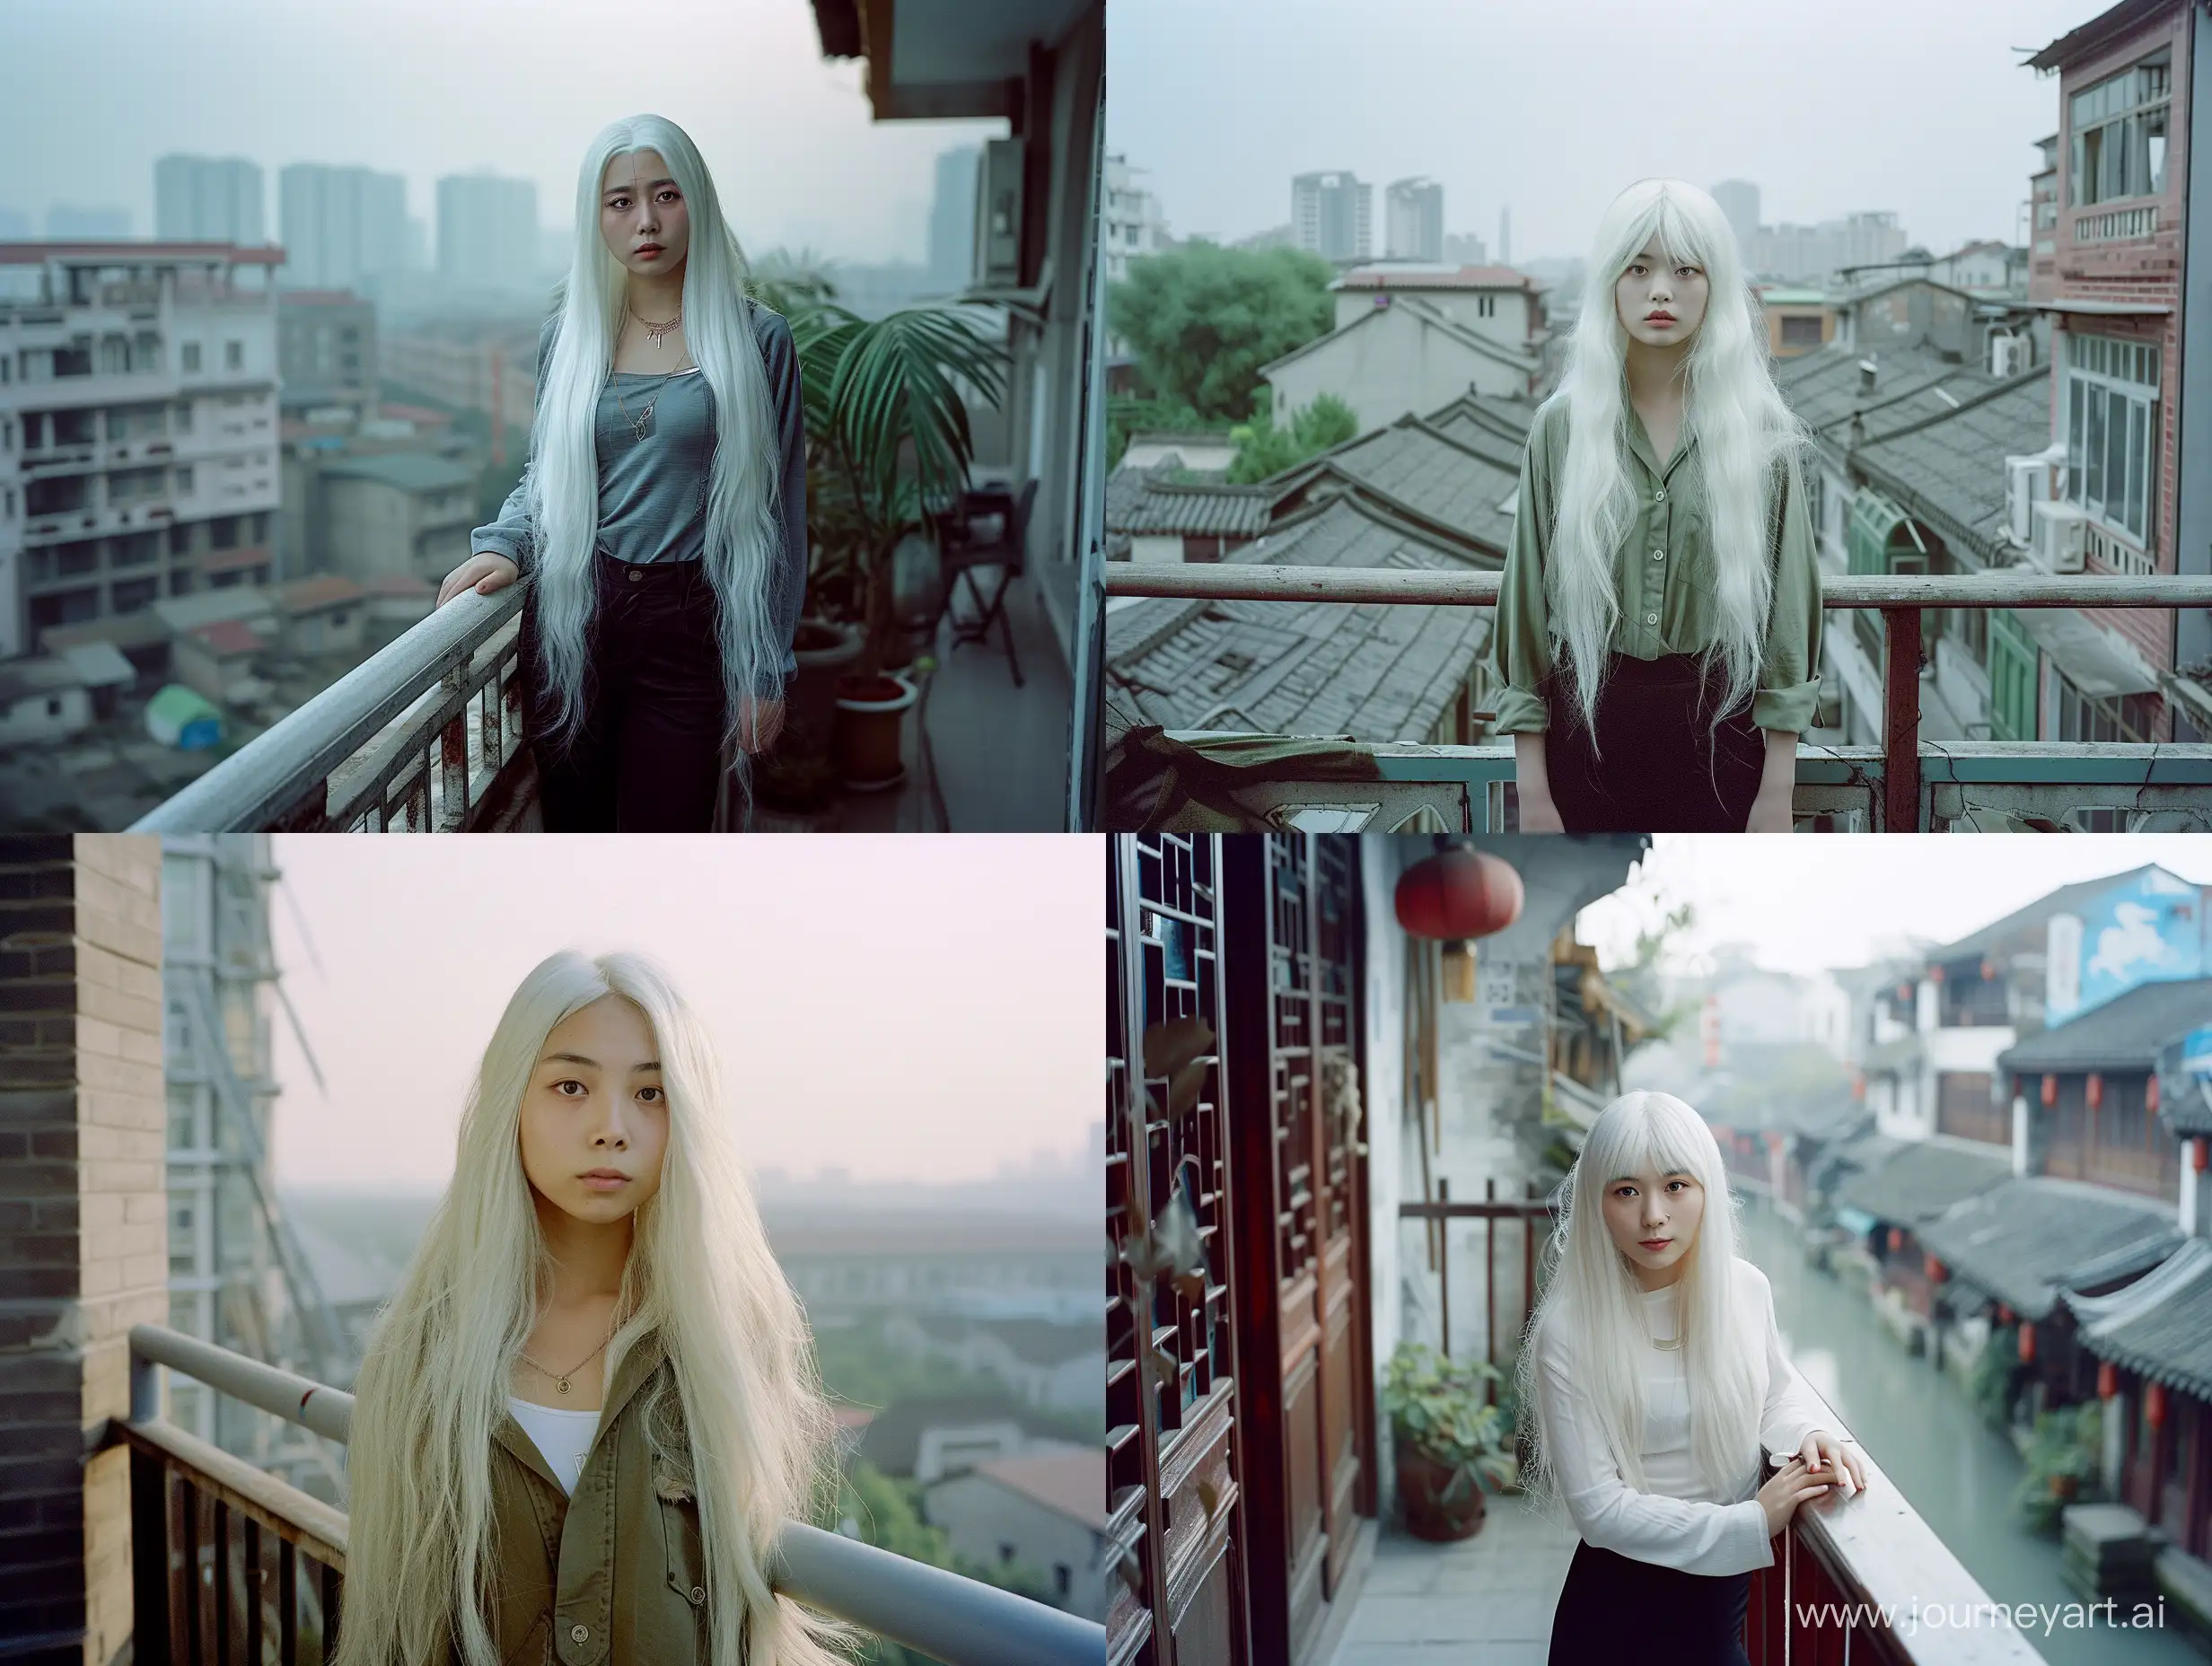 Futuristic-Chinese-Woman-on-Suzhou-City-Balcony-4K-Cinematic-Shot-with-AwardWinning-Aesthetic